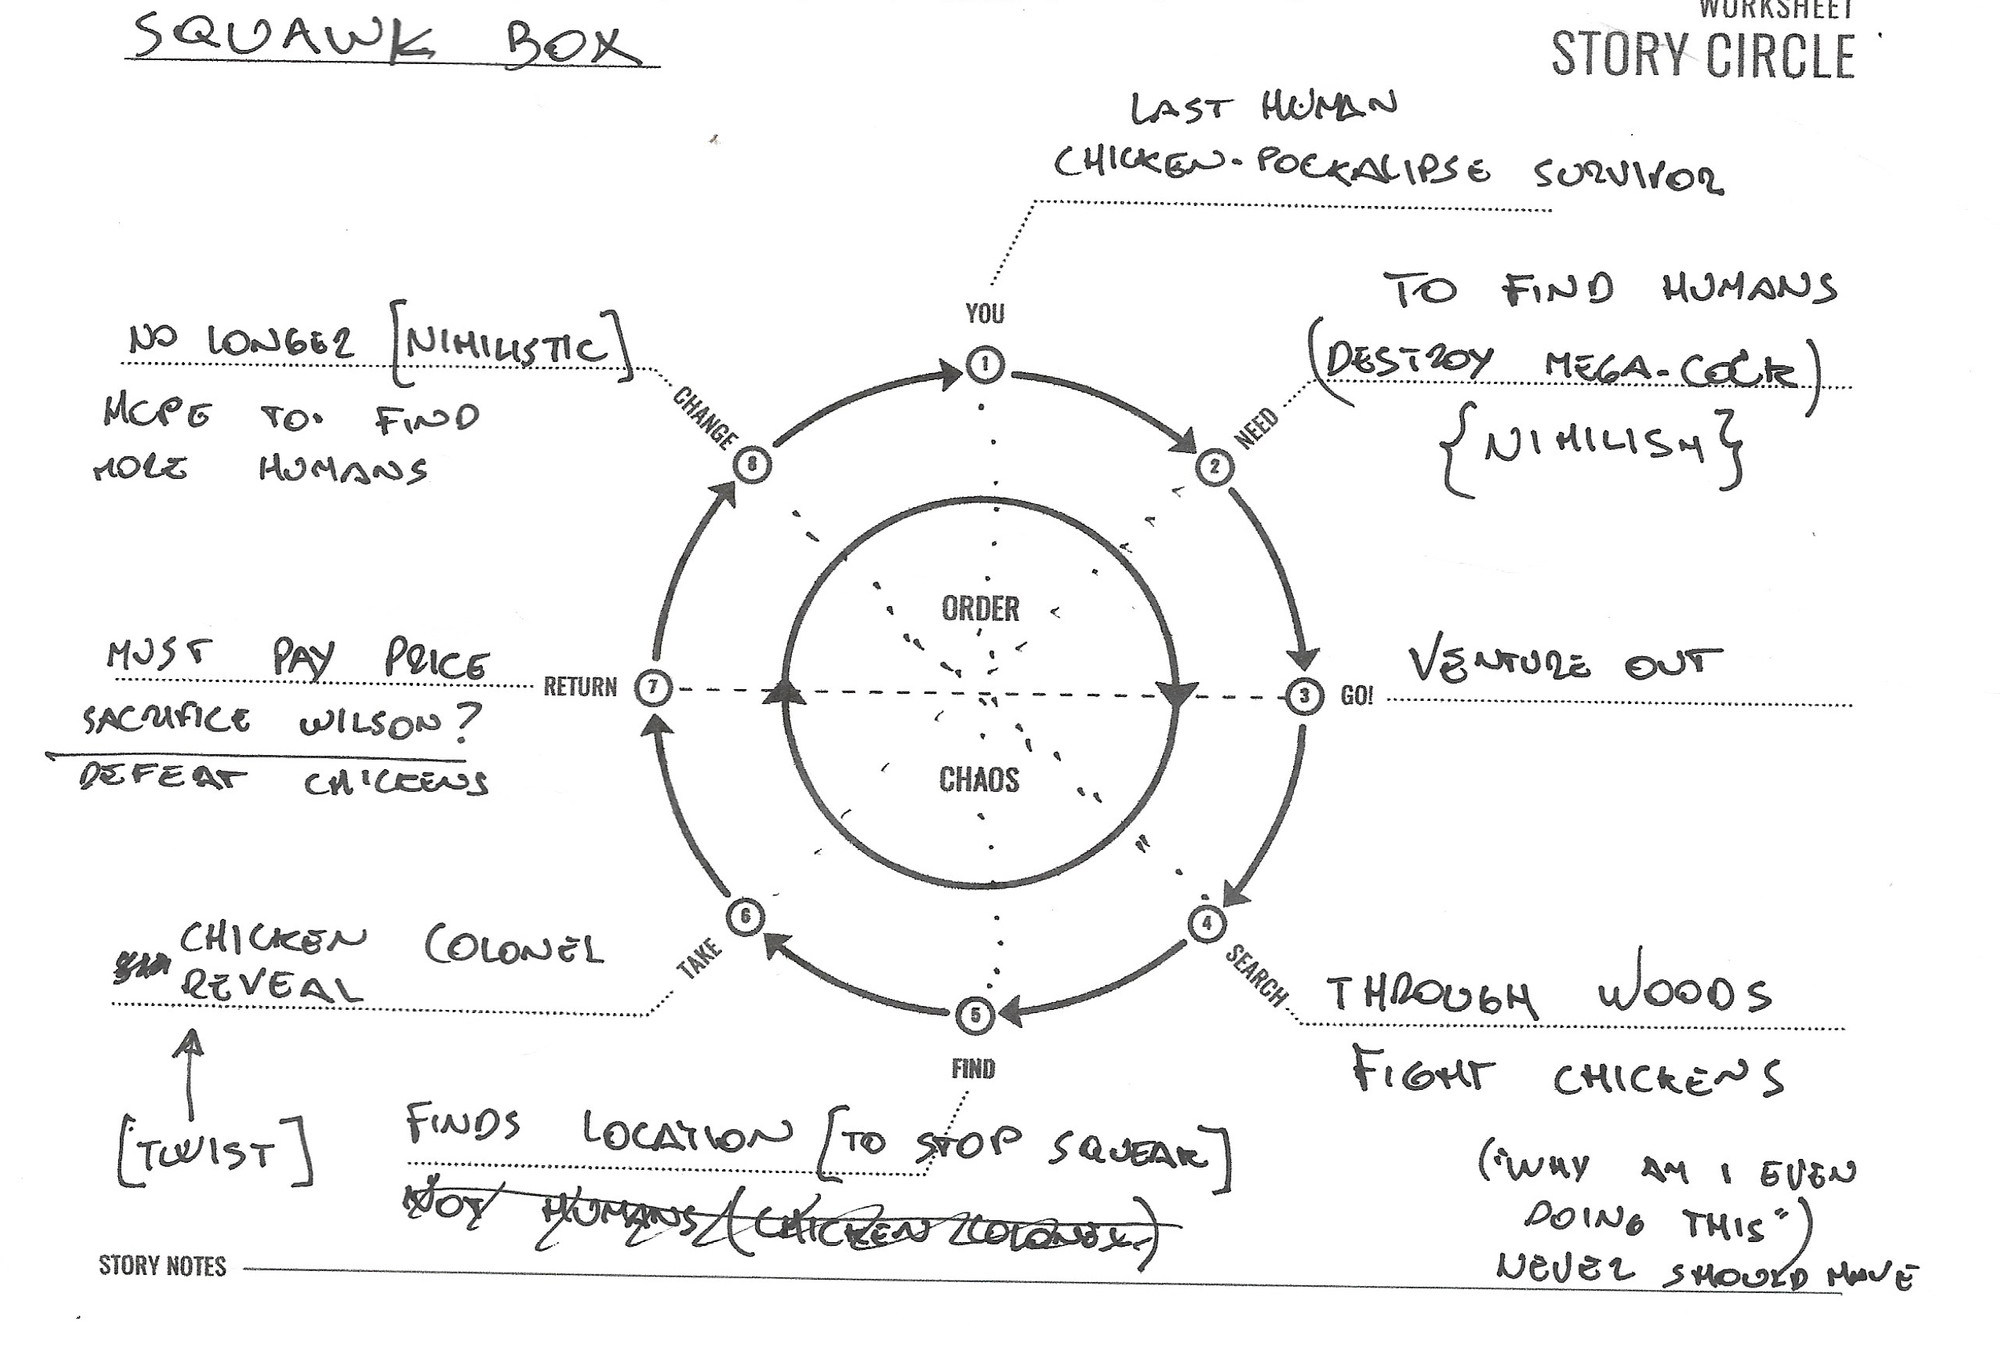 Story Circle diagram of Sqawkalypse 